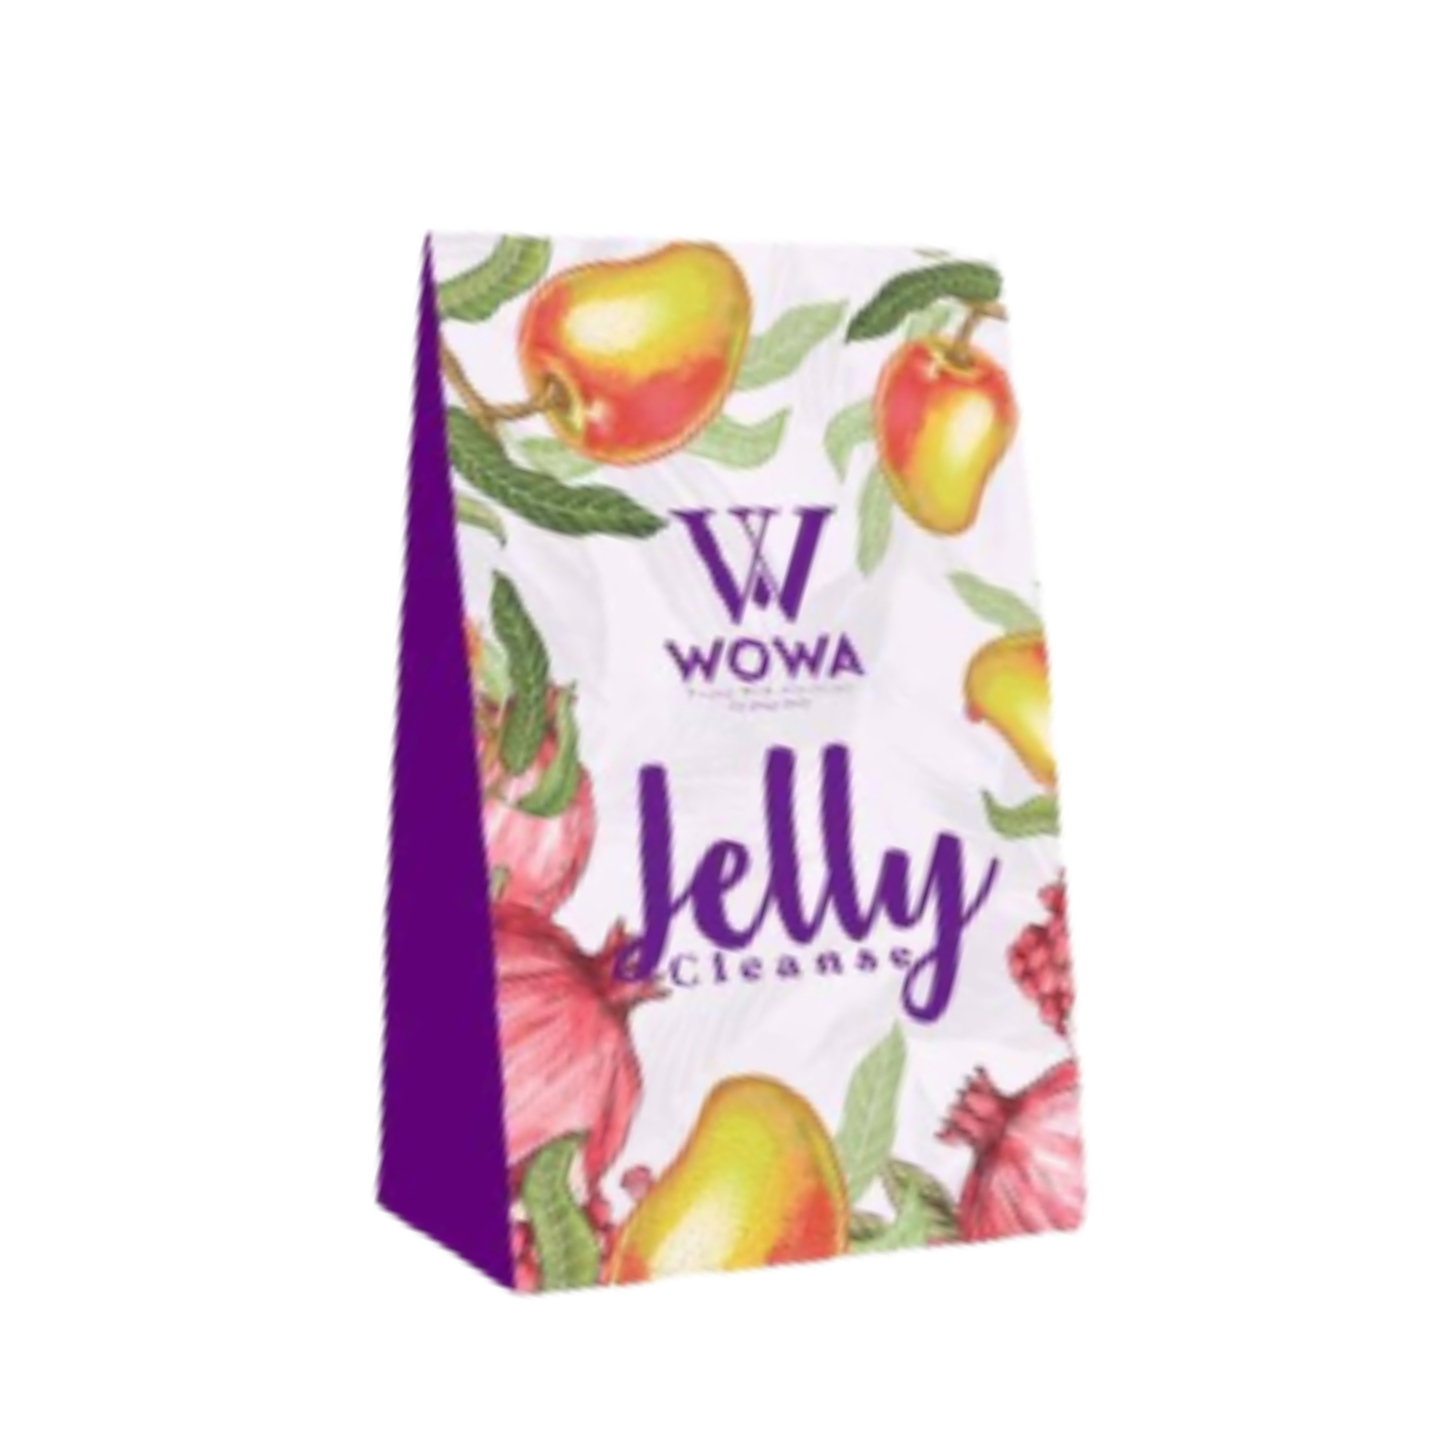 Wowa Jelly Cleanse PRE-ORDER